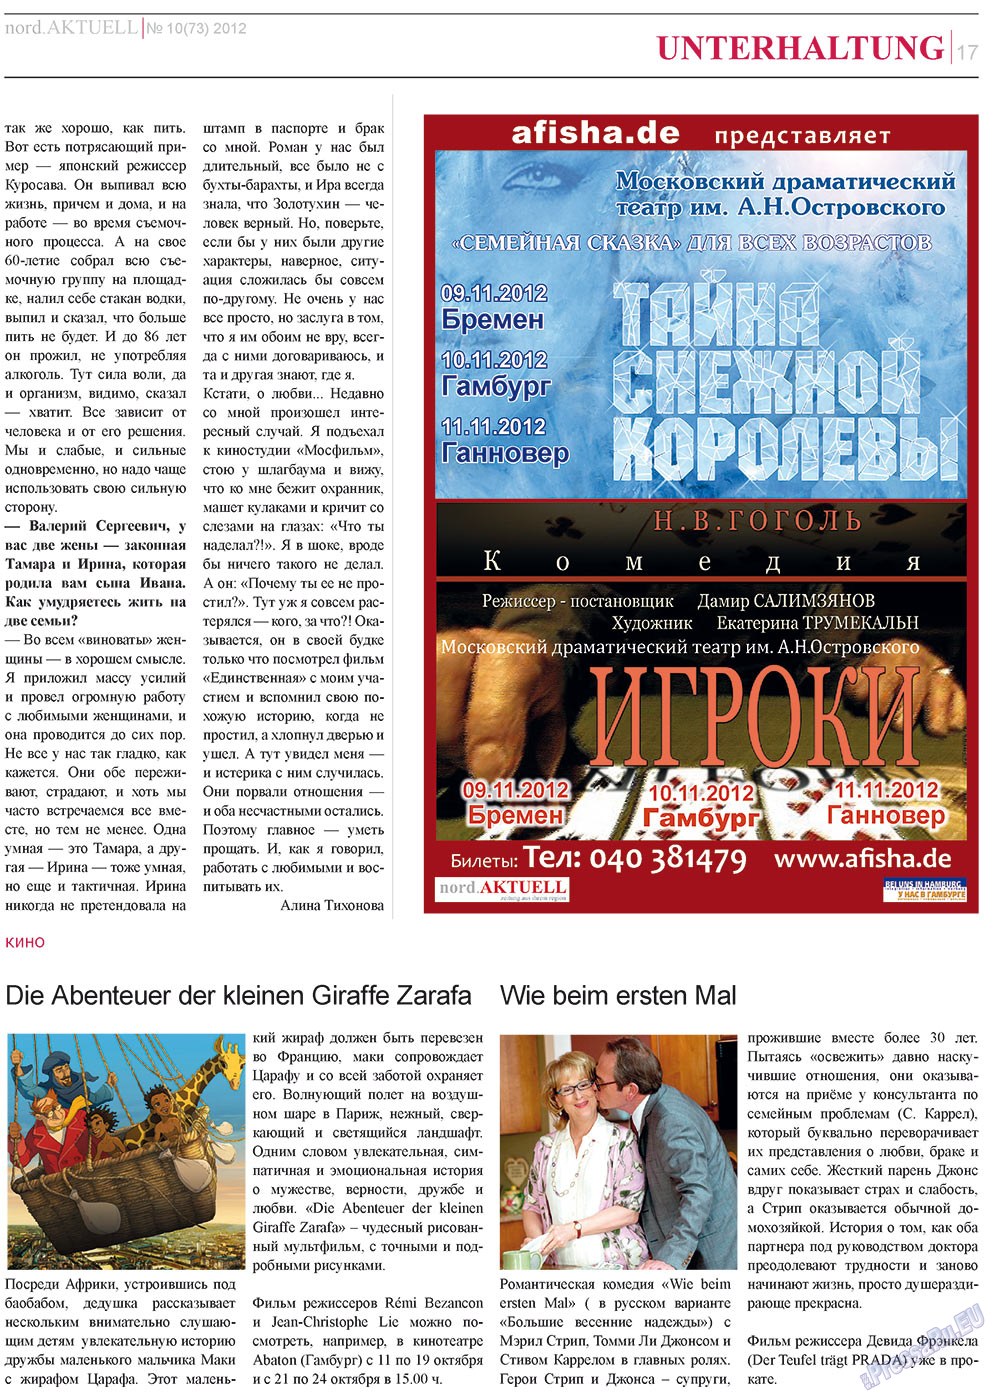 nord.Aktuell, газета. 2012 №10 стр.17